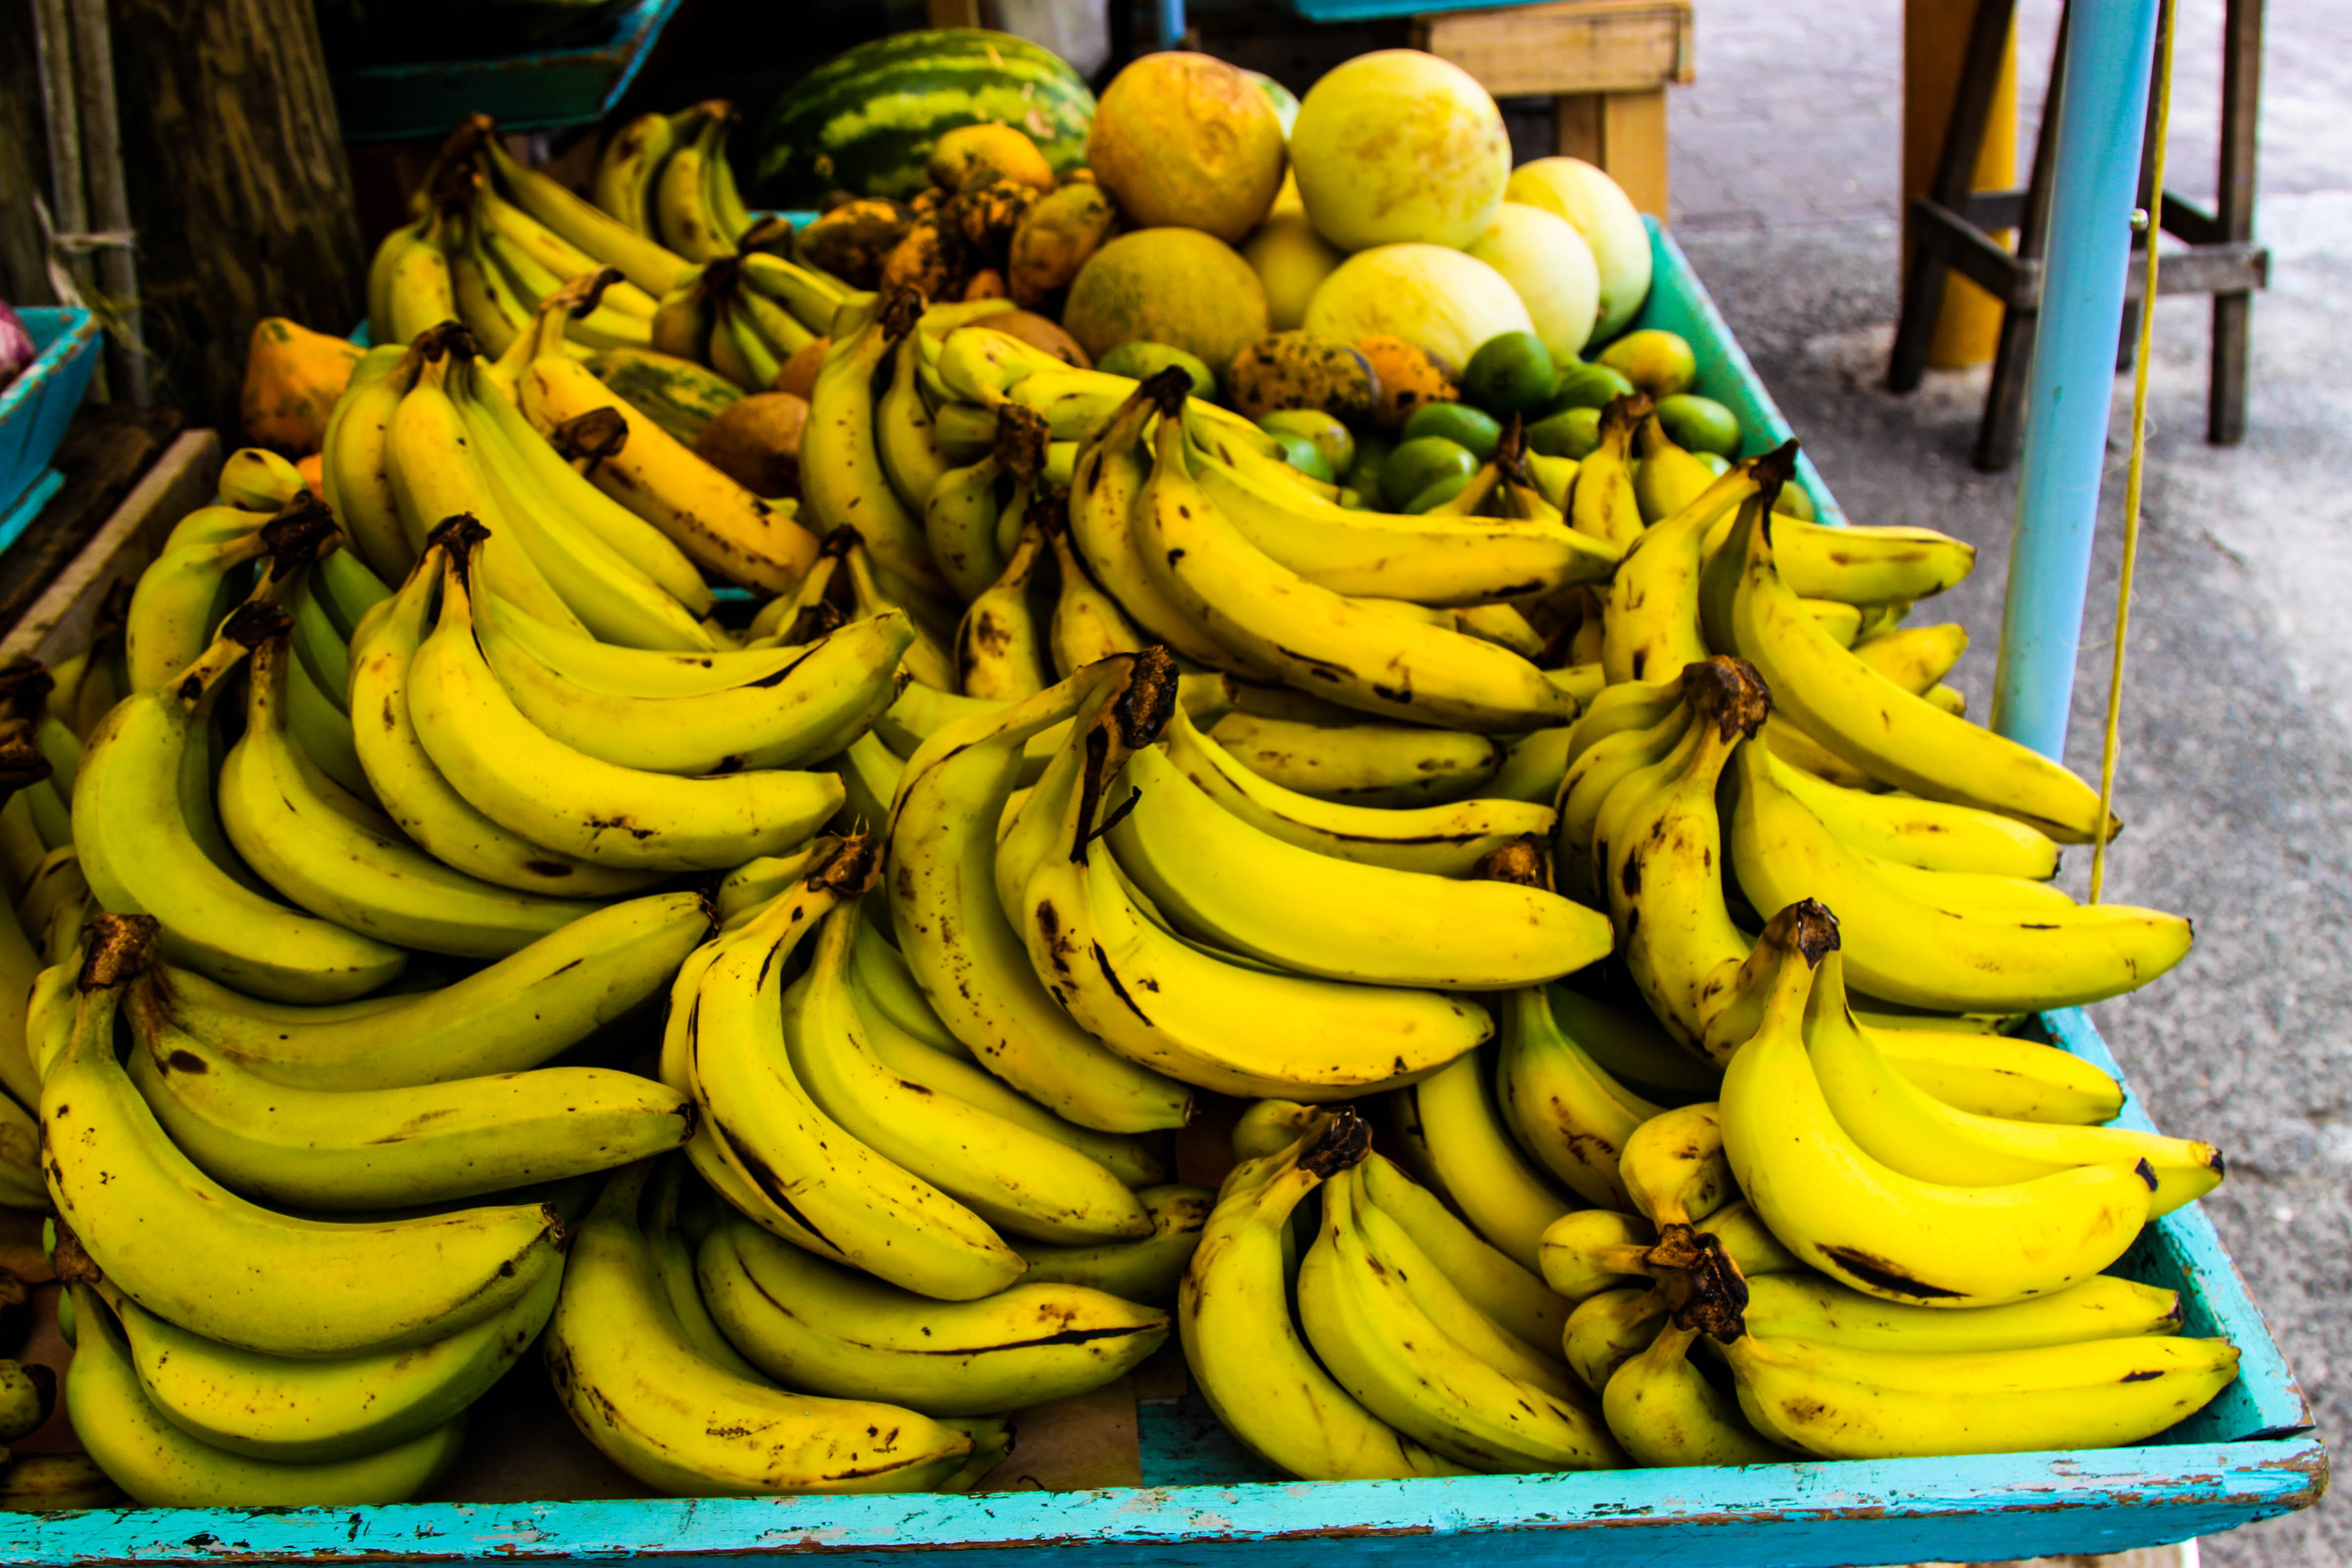 Tray of bananas